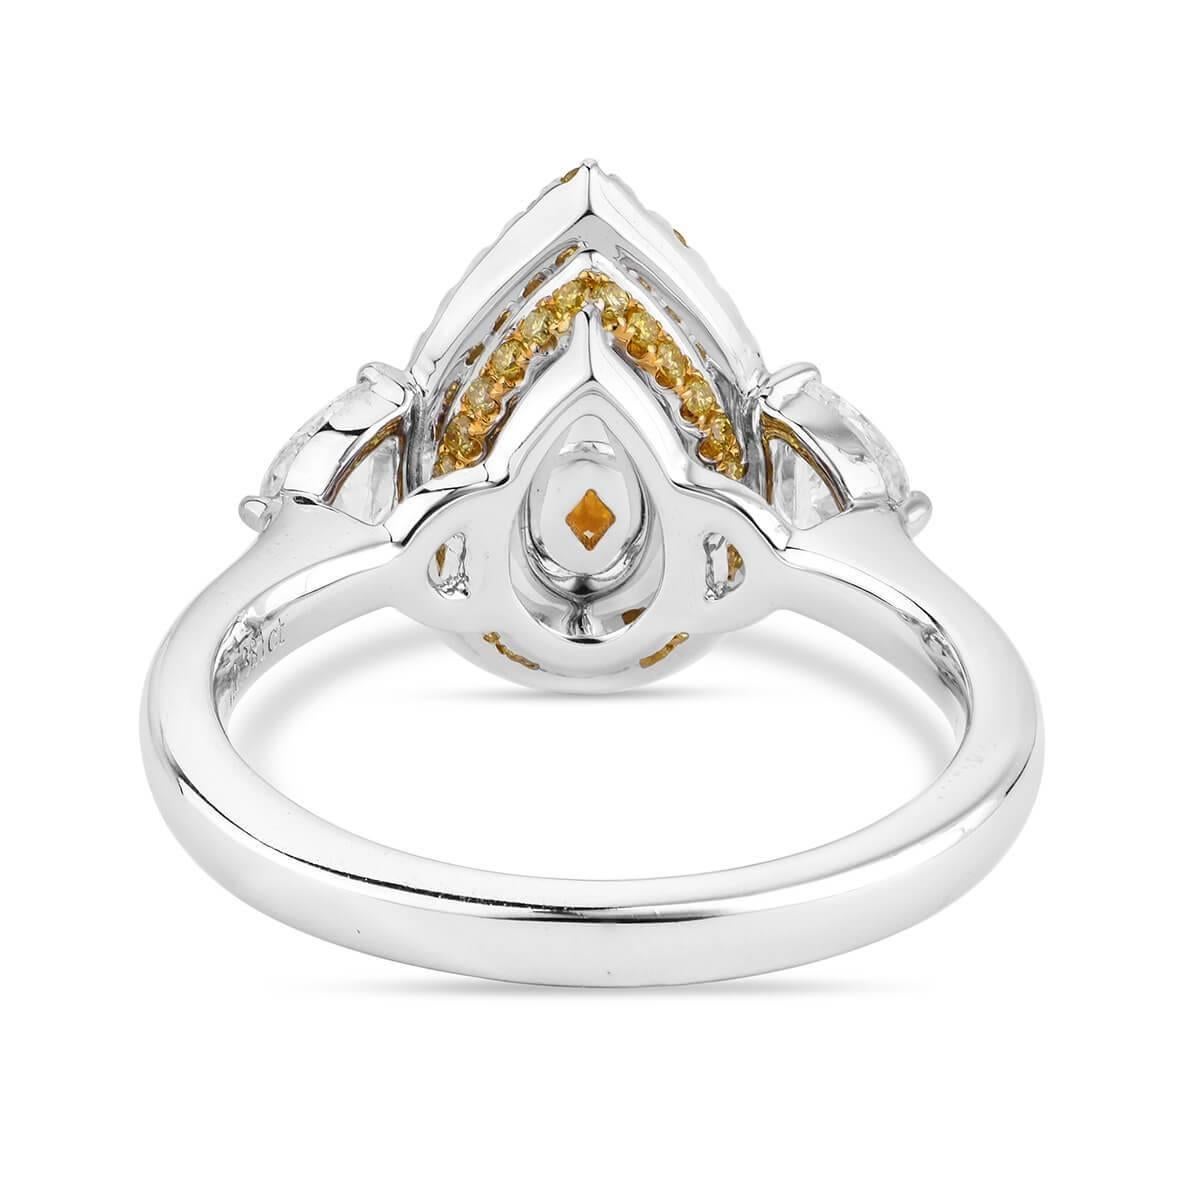 Women's or Men's GIA Certified 3.17 Carat Pear Cut Diamond Ring For Sale